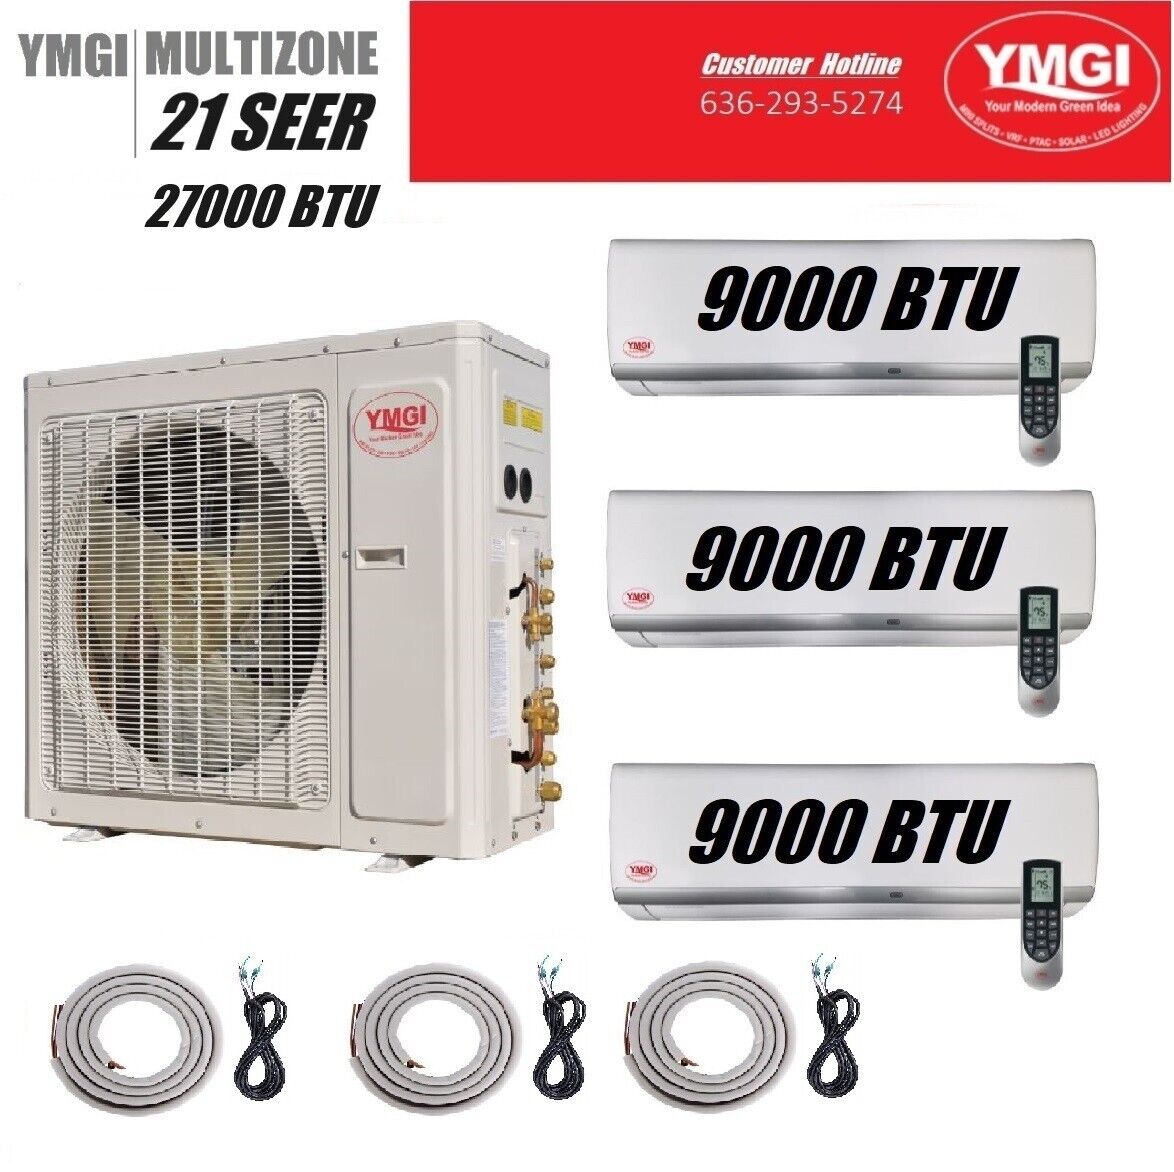 YMGI 27000 BTU 3 ZONE 21 Seer Ductless Mini Split Air Conditioner Heat Pump 20PO